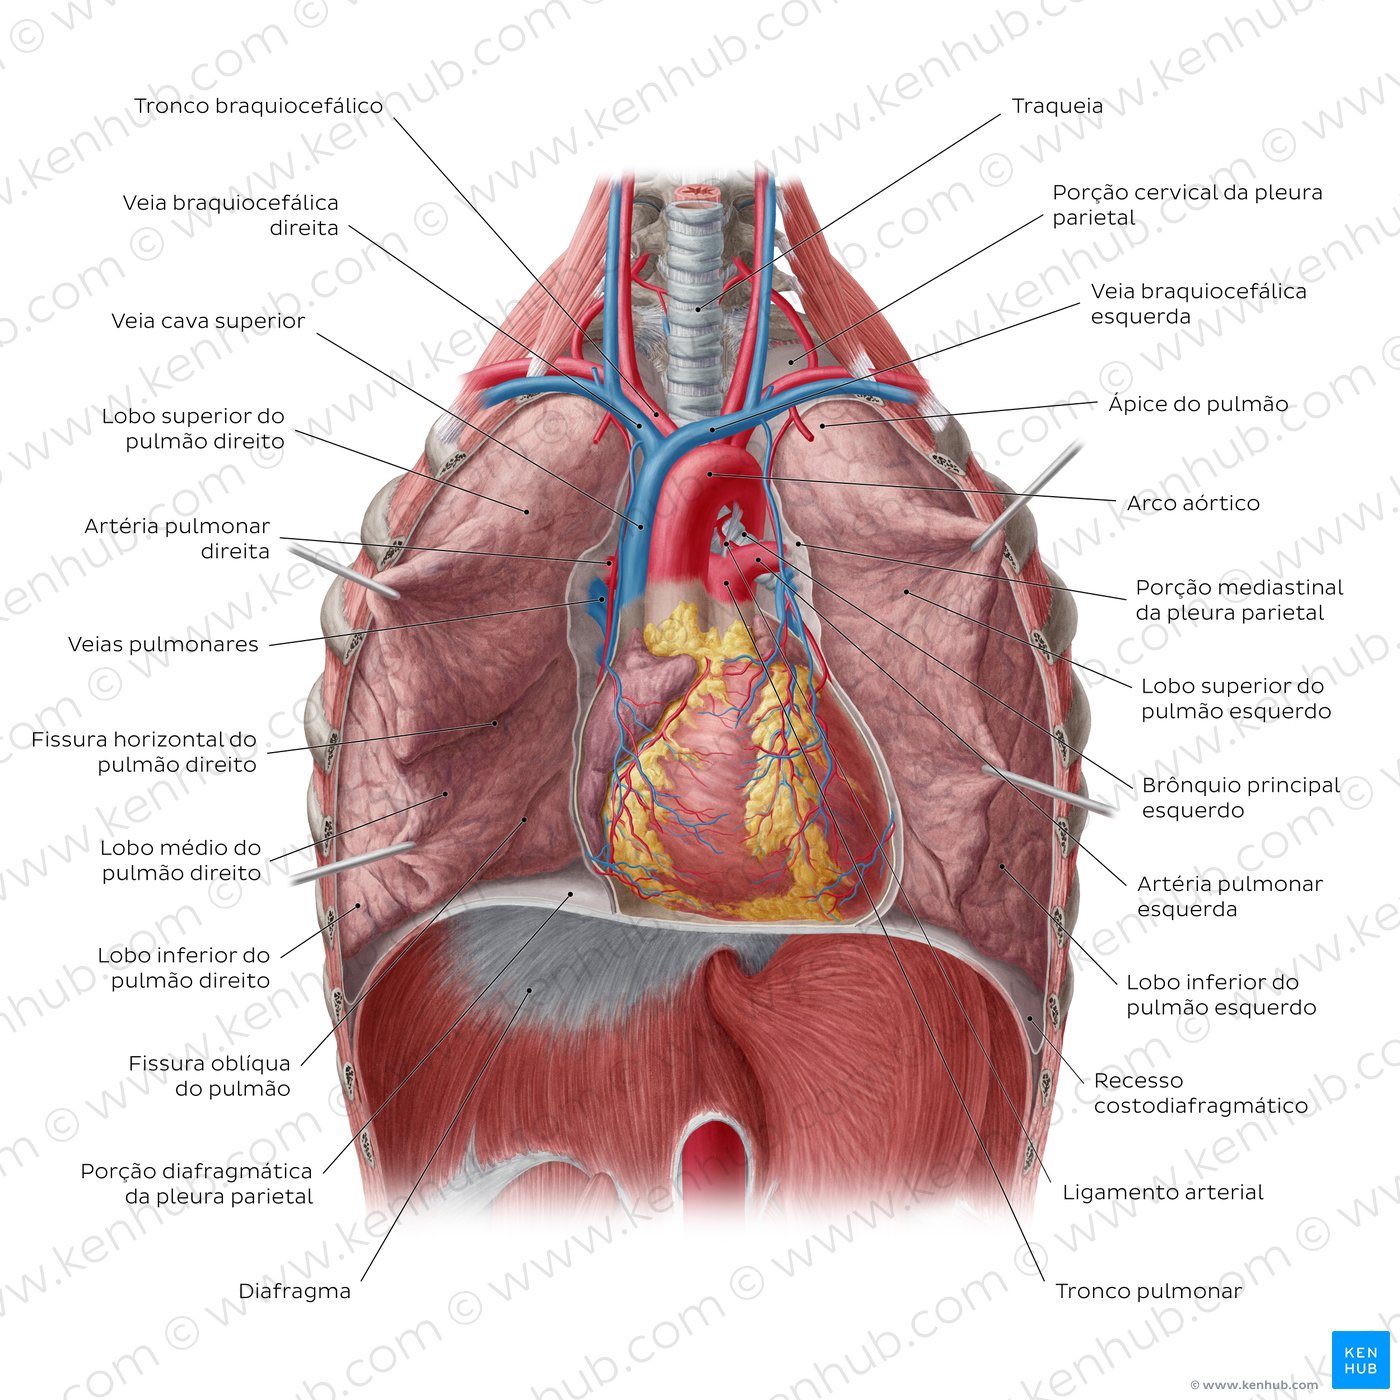 Visão geral dos pulmões in situ - vista anterior